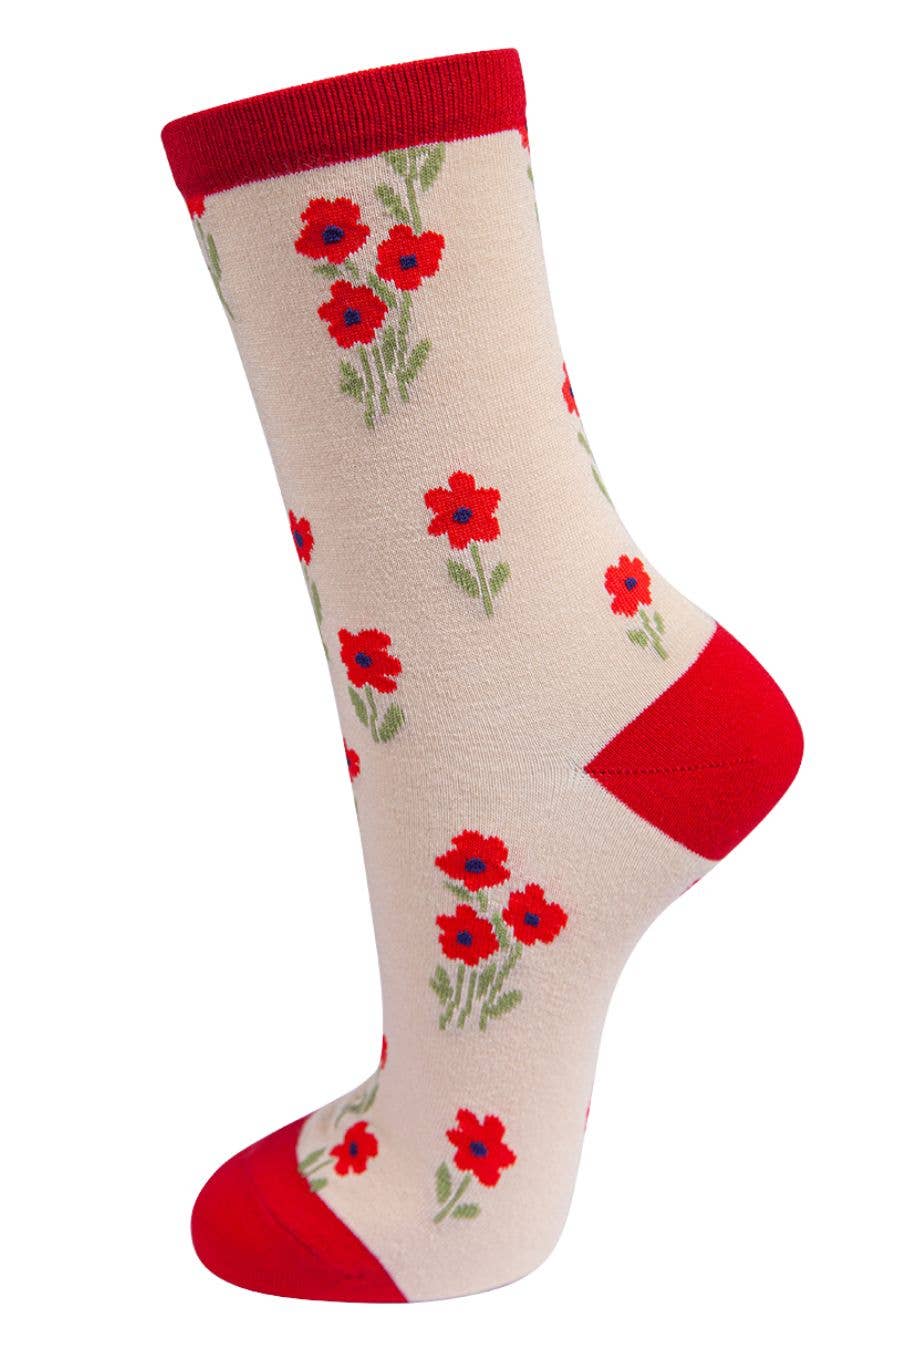 Sock Talk - Womens Bamboo Socks Ditsy Floral Print Ankle Socks Flowers